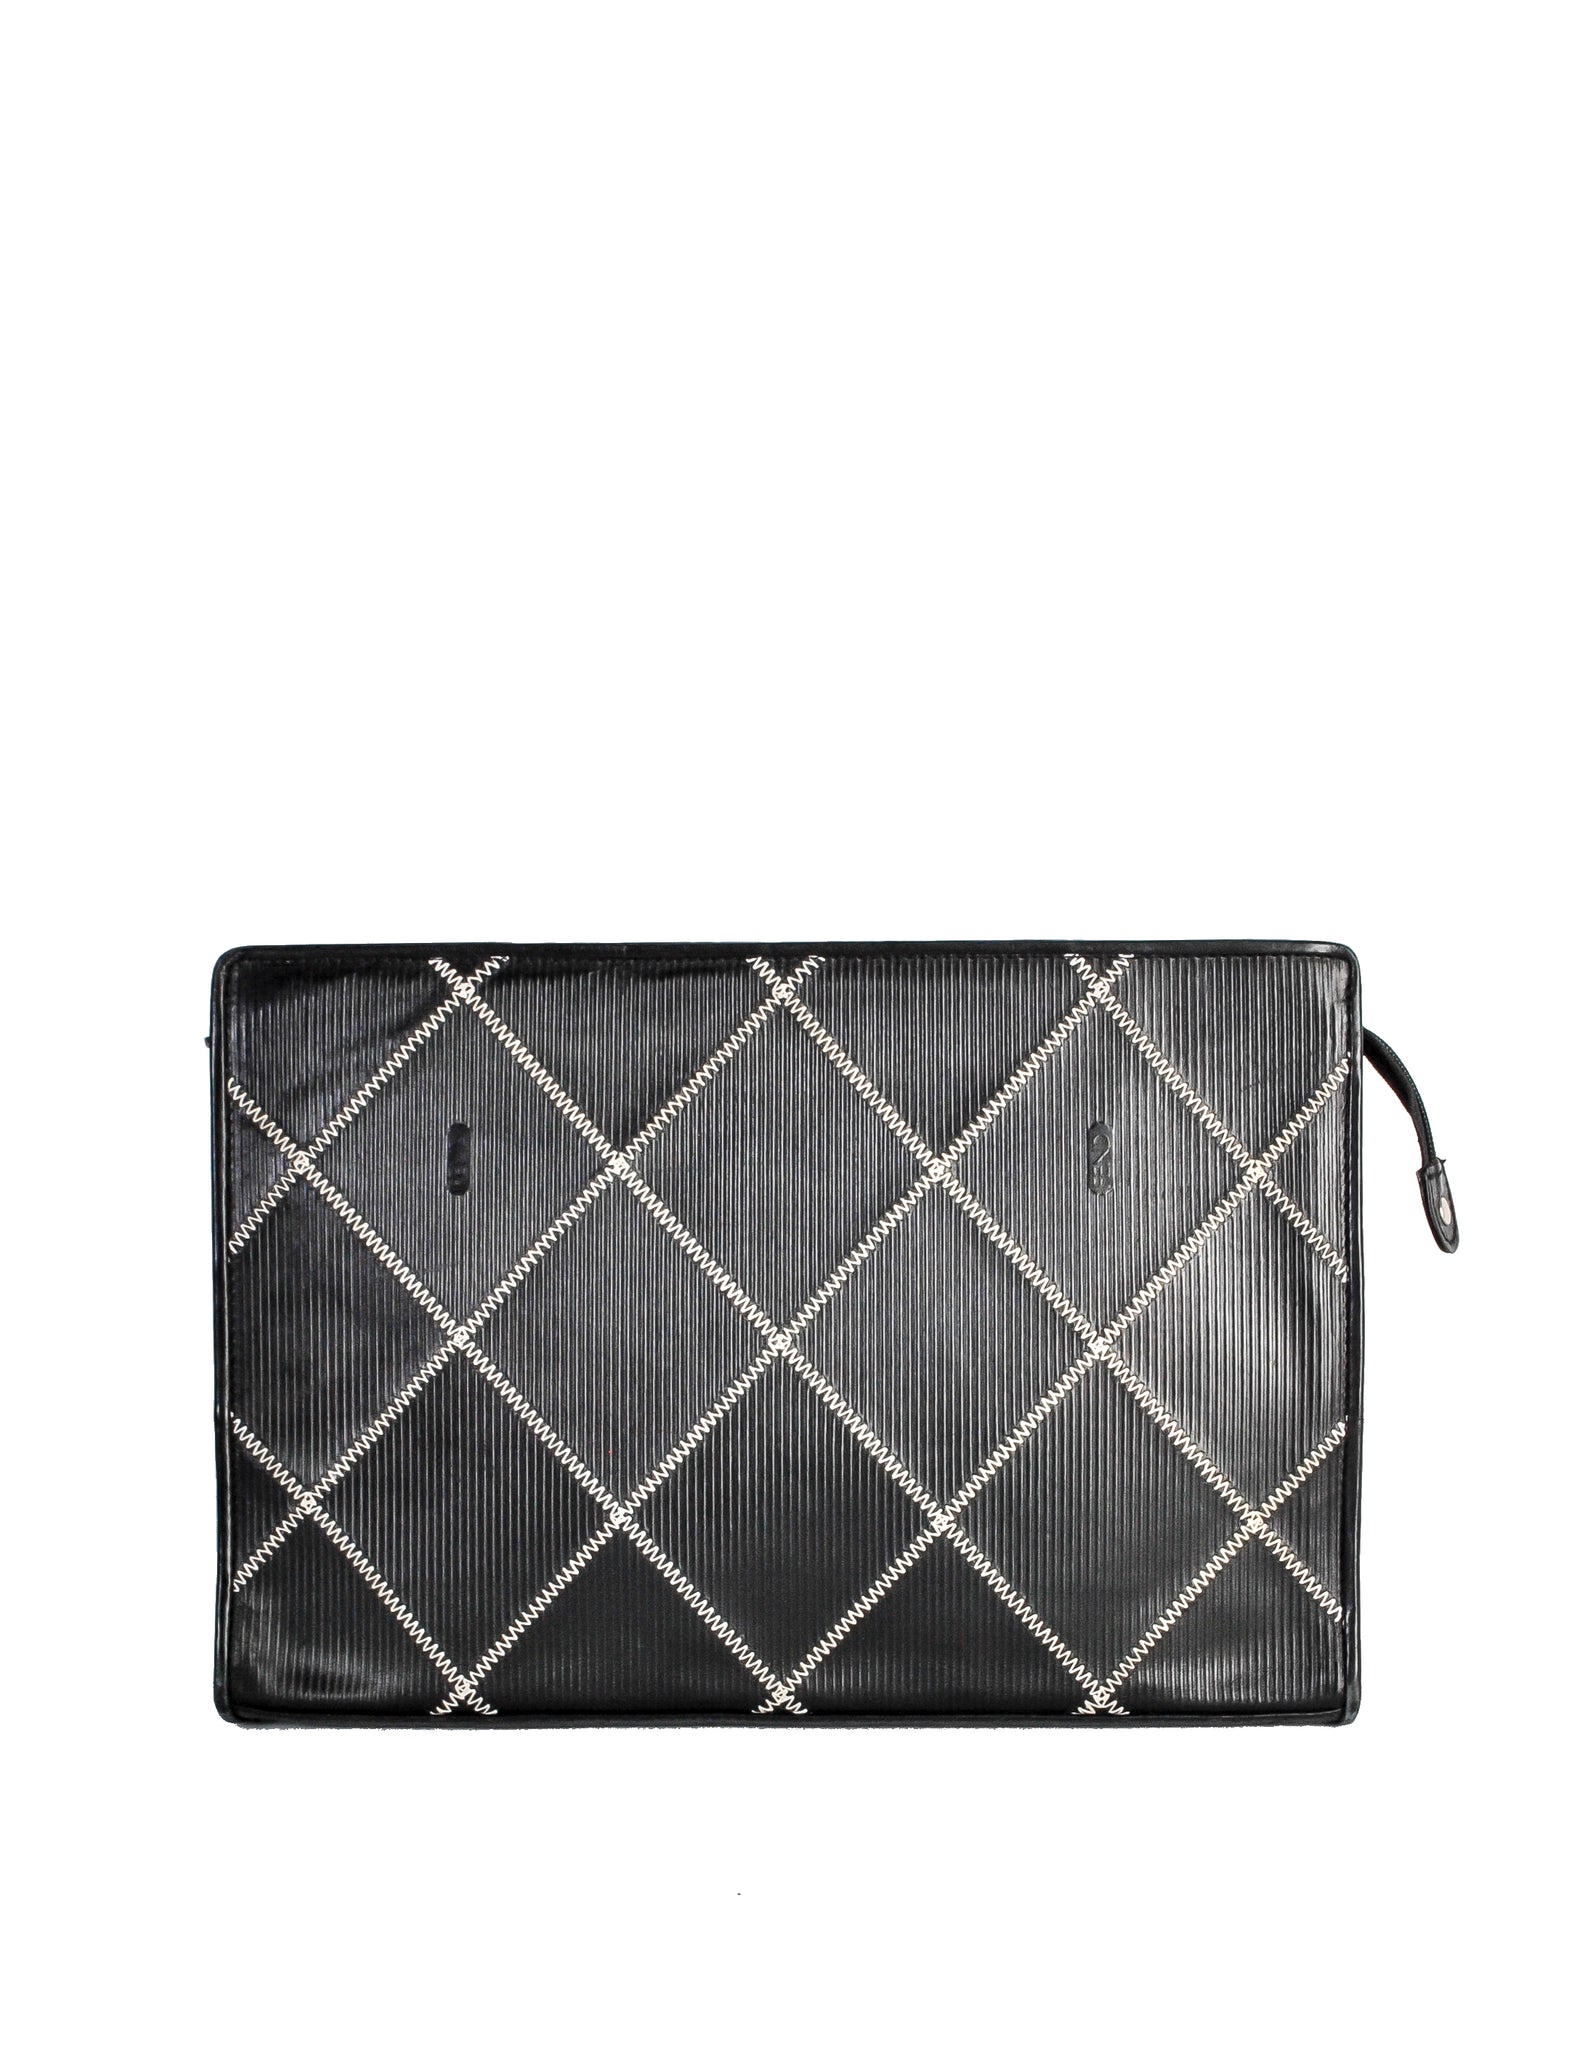 Fendi Vintage Black Ribbed Leather Contract Stitch Portfolio Clutch Bag